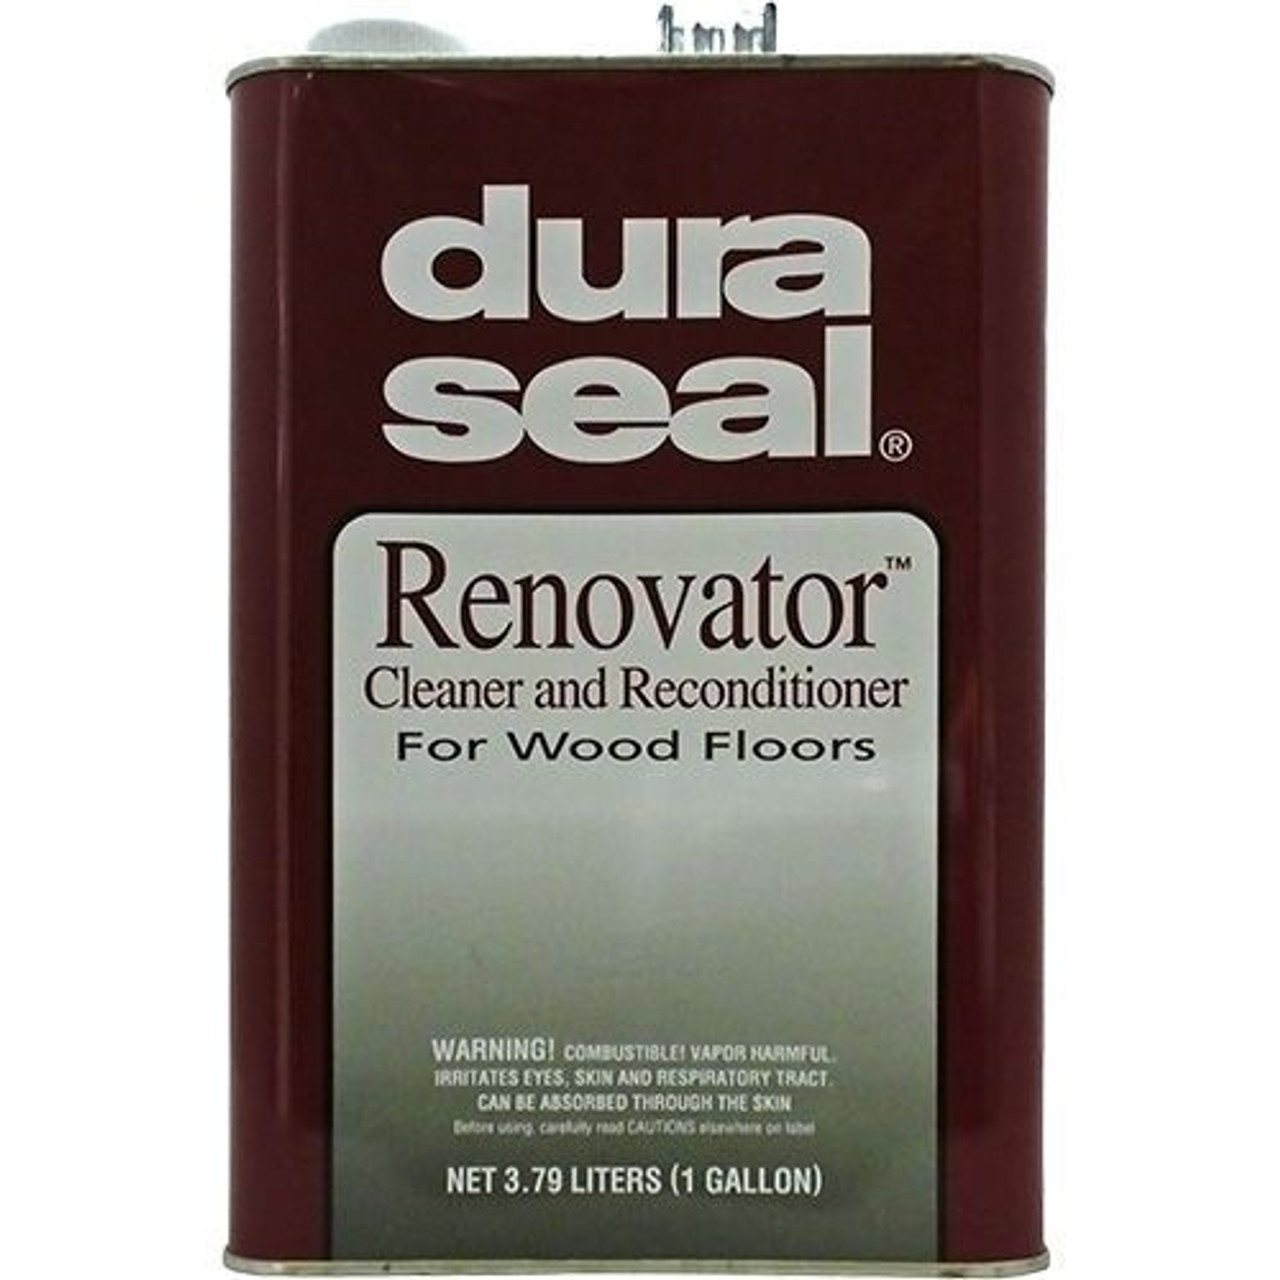 DuraSeal Renovator Cleaner & Reconditioner